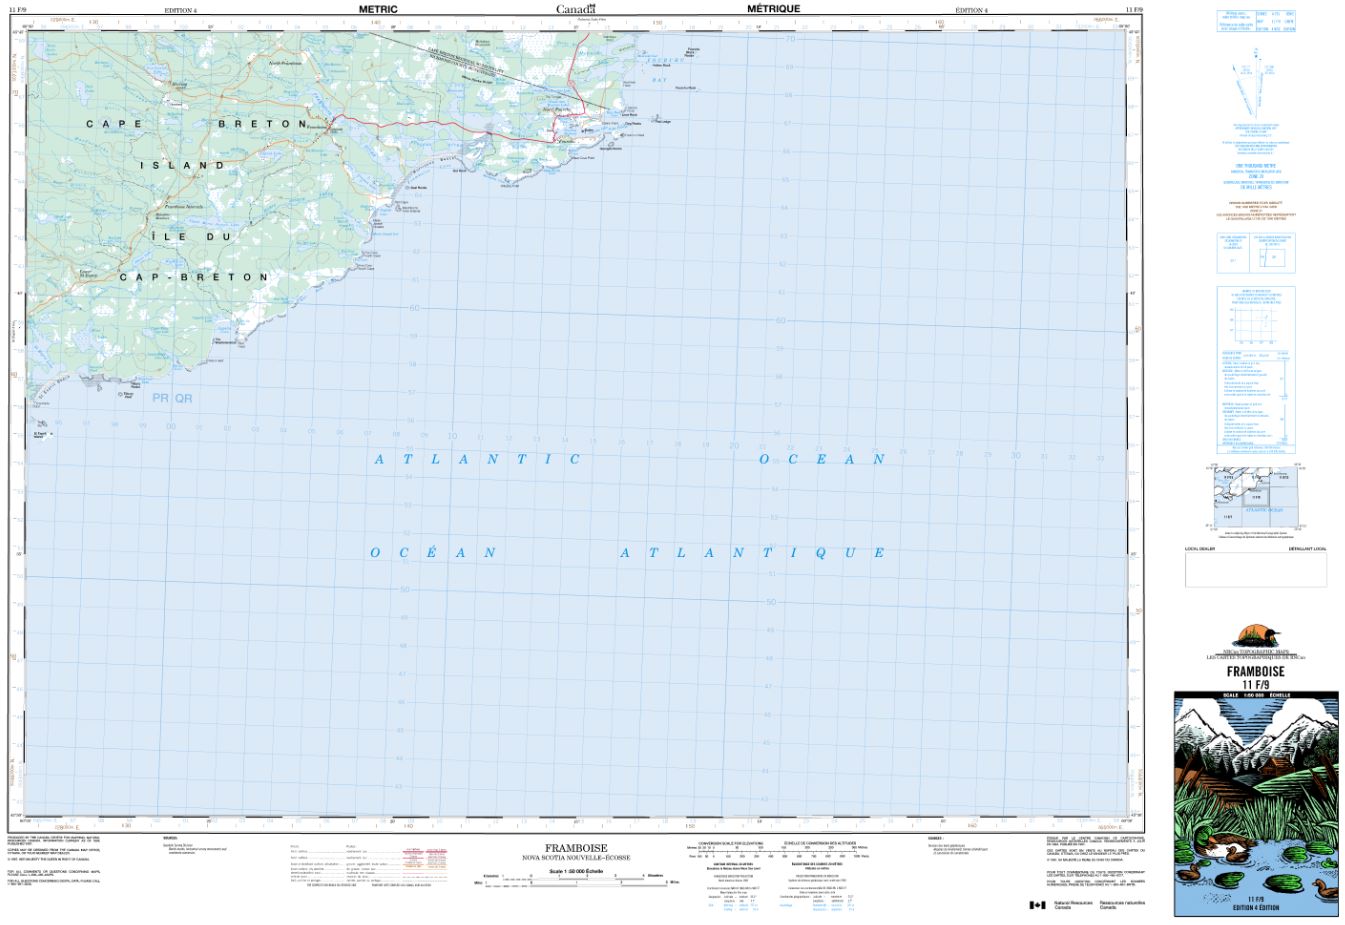 11F/09 Framboise Topographic Map Nova Scotia